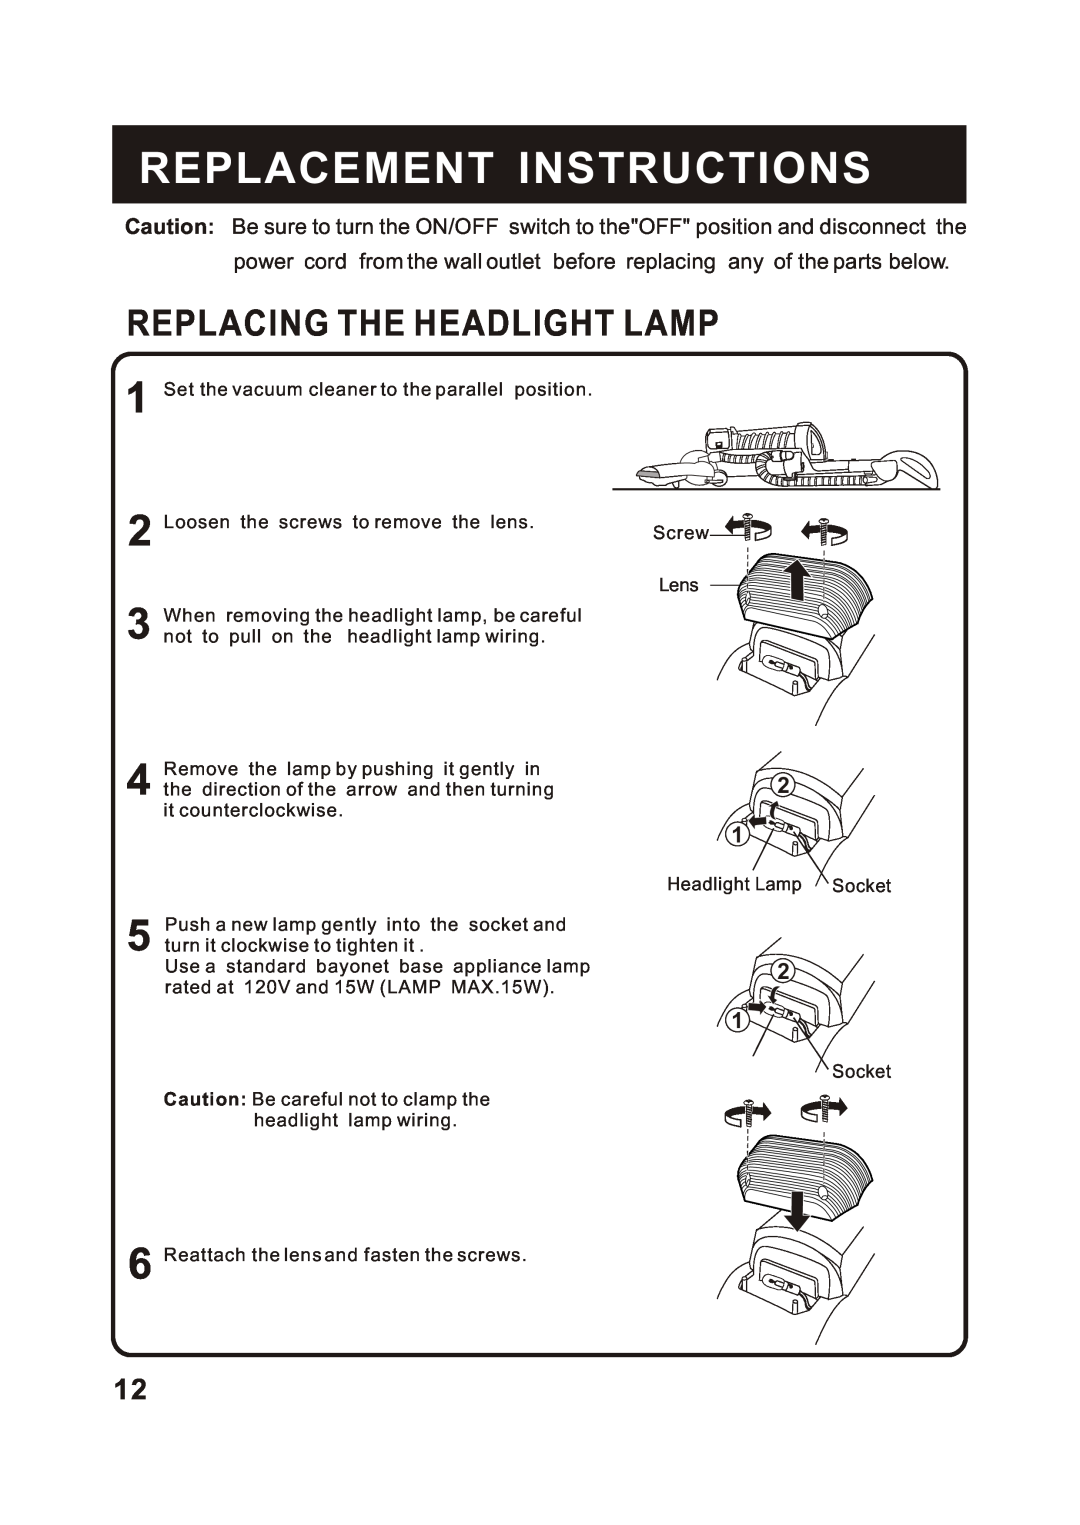 Fantom Vacuum FM742C instruction manual Replacement Instructions, Replacing The Headlight Lamp 